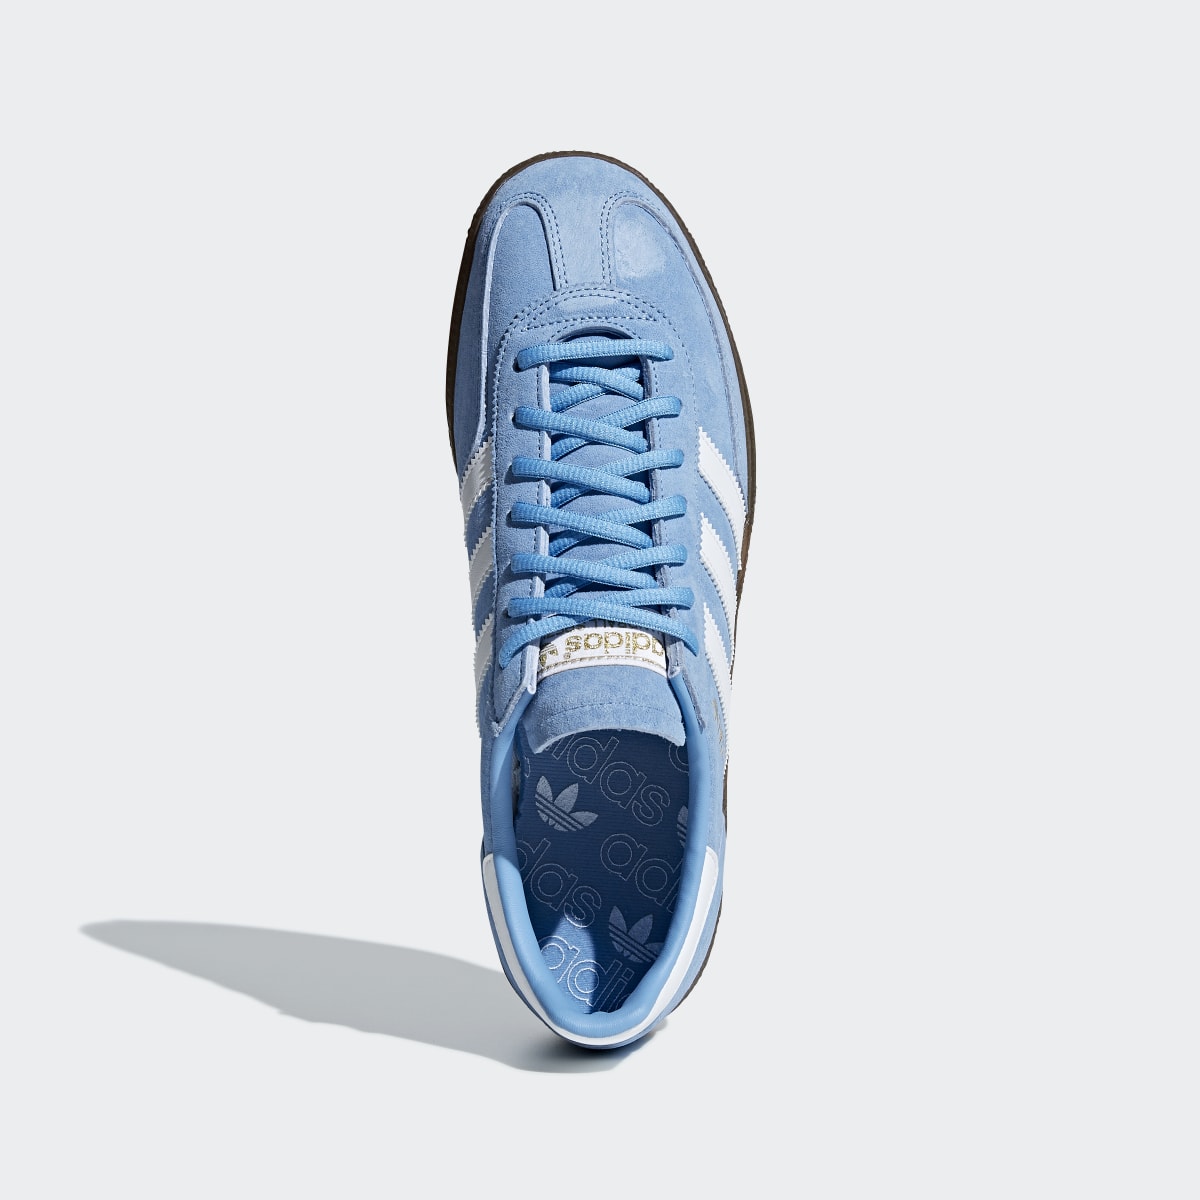 Adidas Handball Spezial Shoes. 4